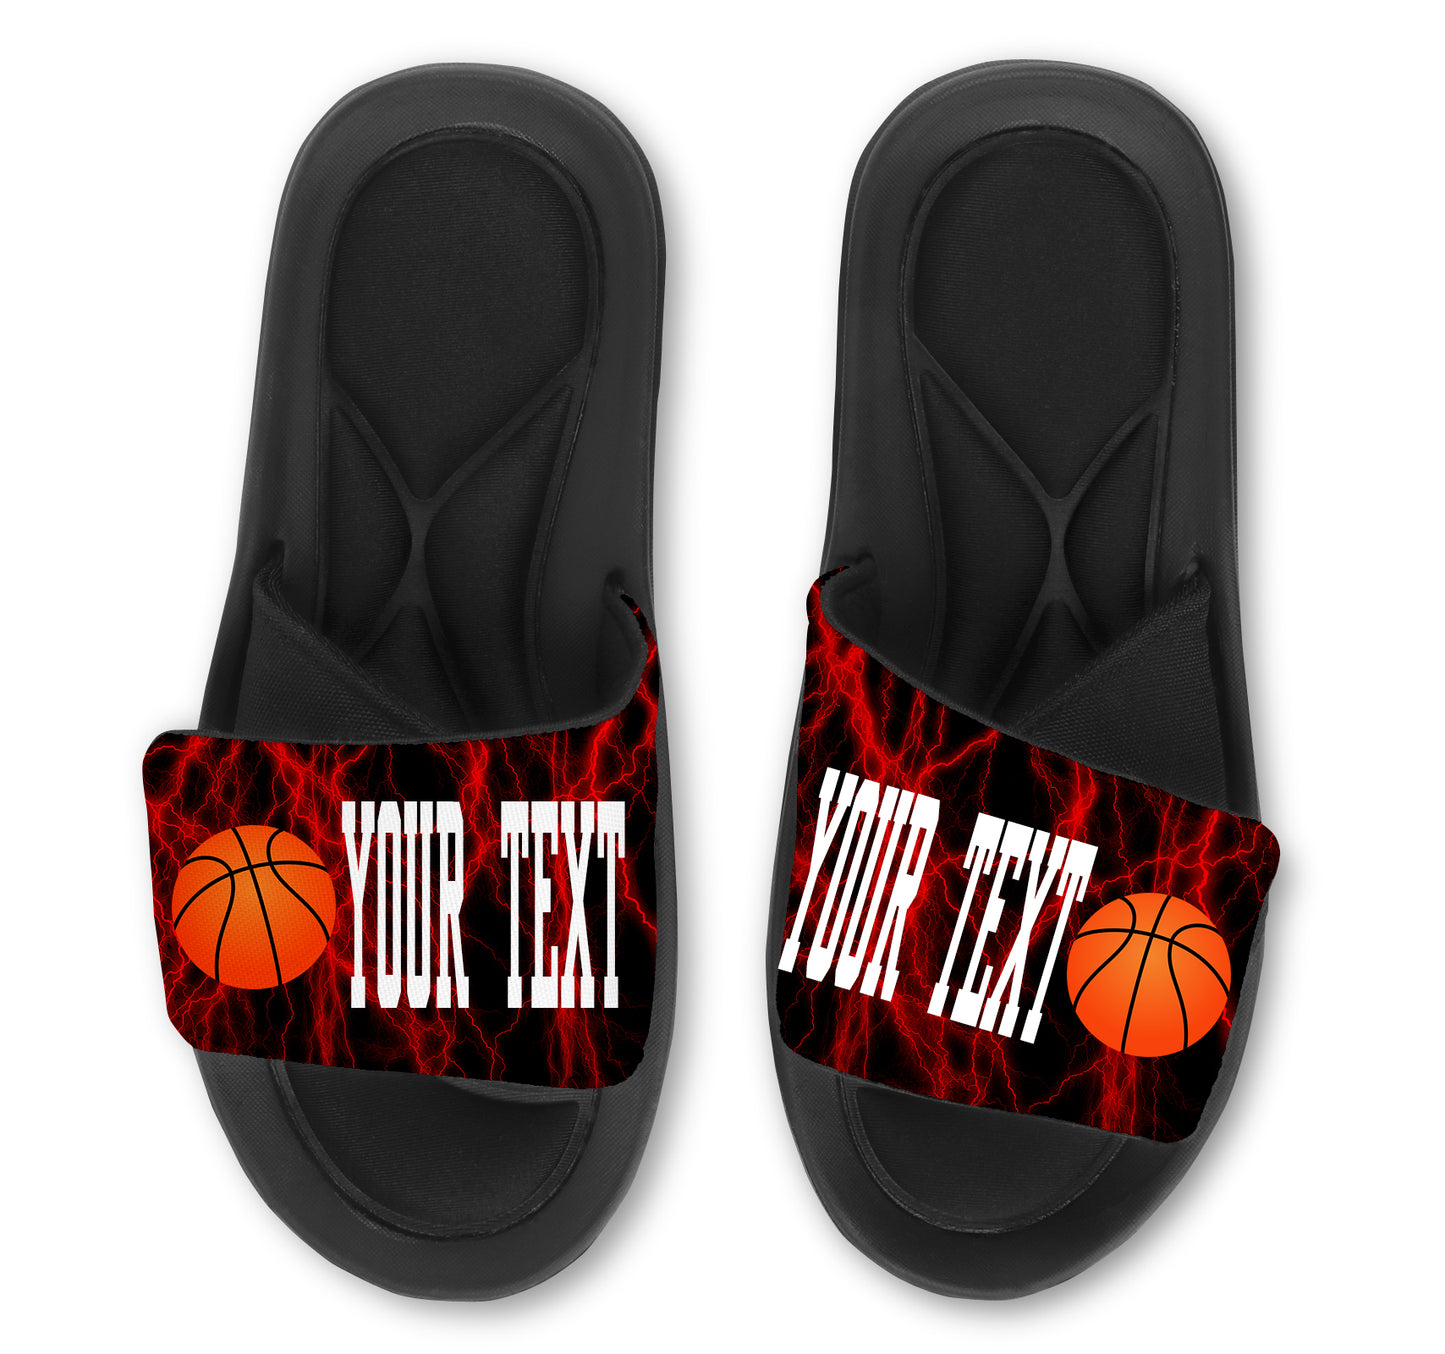 Basketball Custom Slides / Sandals - Choose Your Colors